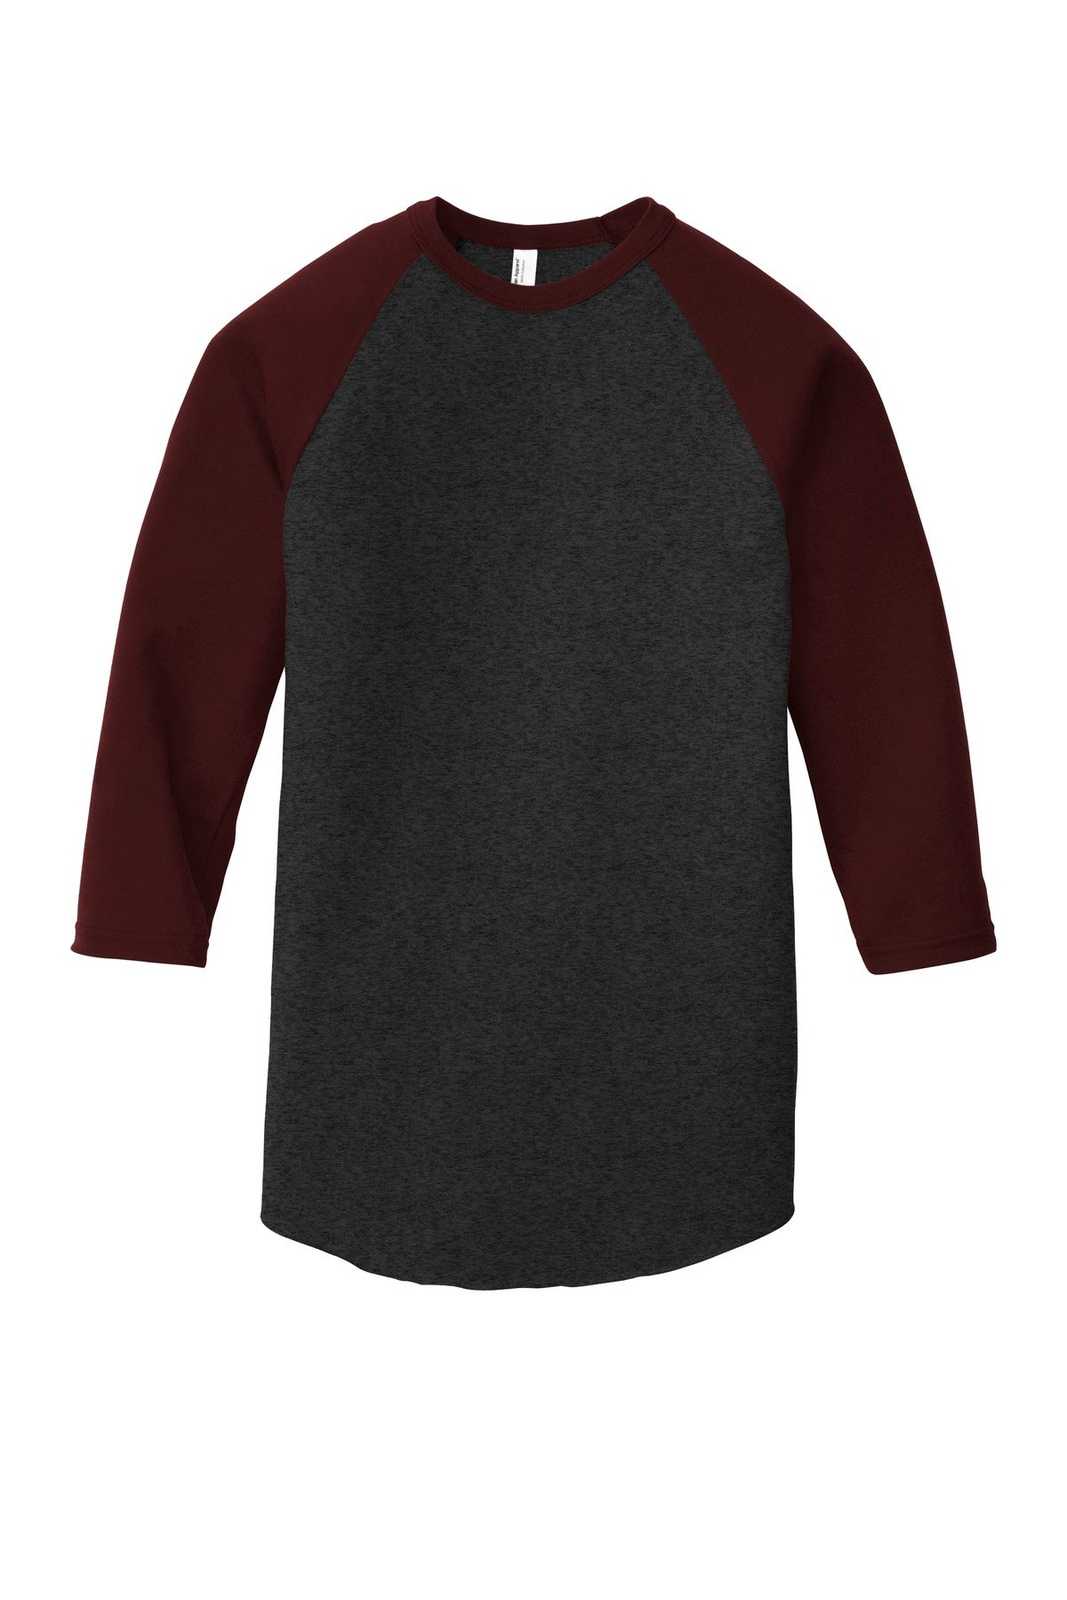 American Apparel BB453W Poly-Cotton 3/4-Sleeve Raglan T-Shirt - Heather Black Truffle - HIT a Double